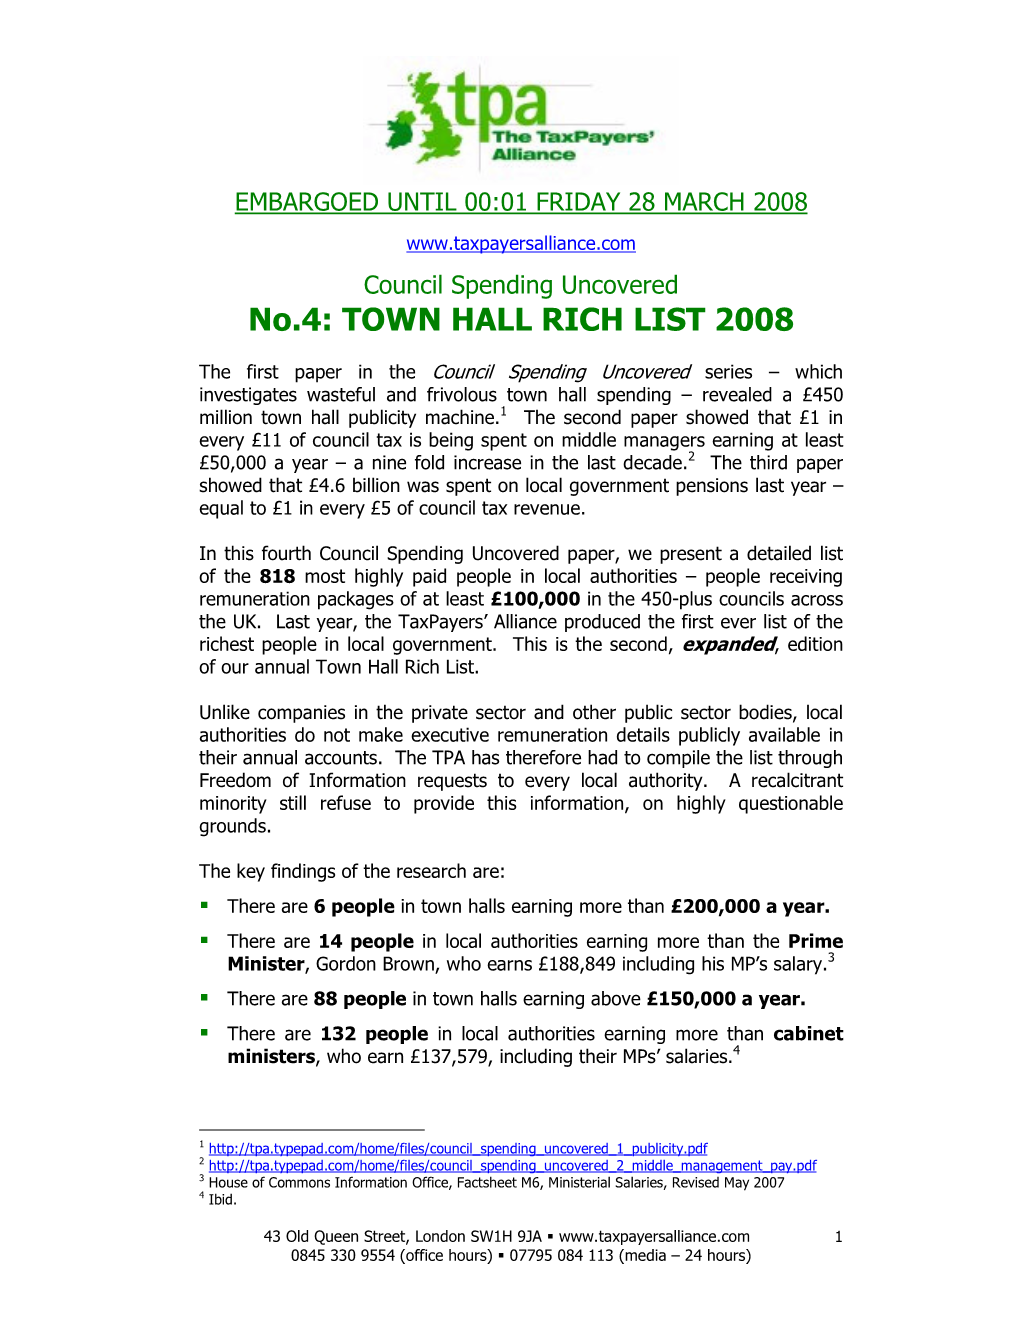 Town Hall Rich List 2008